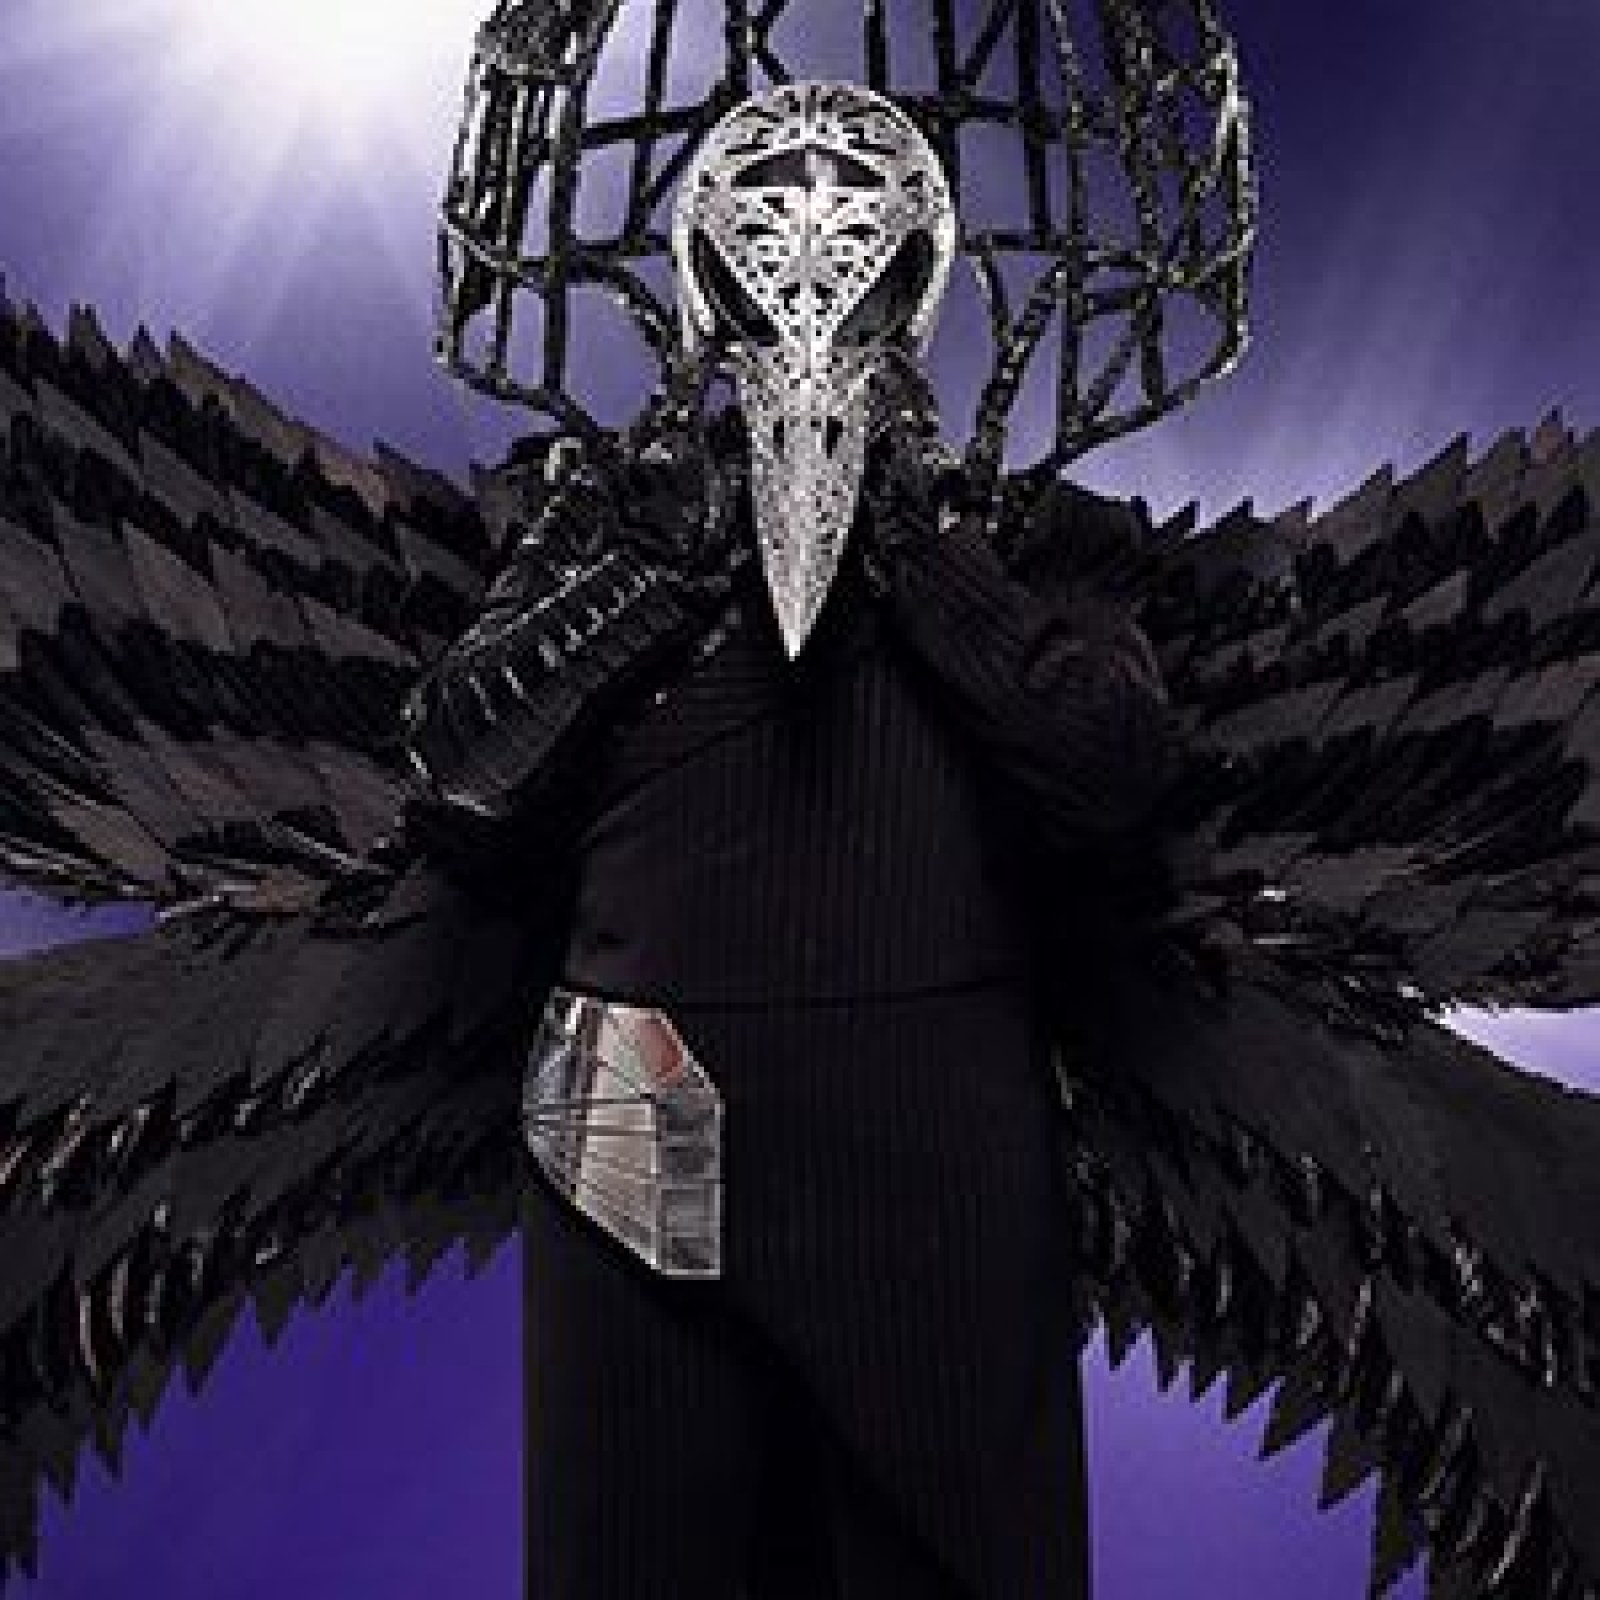 Шоу маска ворона. Маскет Сингер. The masked Singer Raven. Маска Сингер Америка.